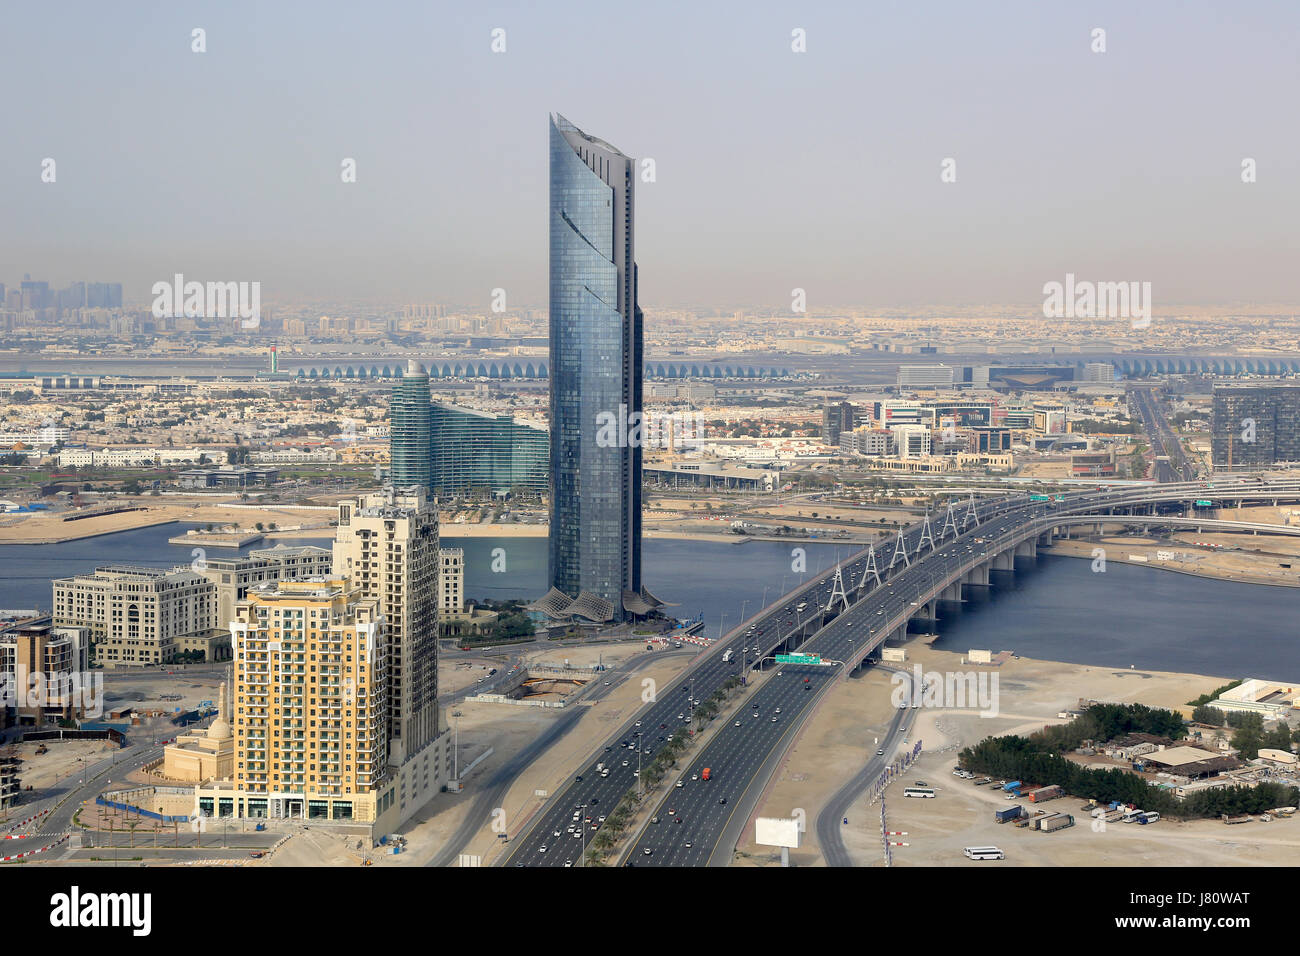 Dubai-D1-Turm-Business-Bay-Bridge Luftbild Fotografie Vereinigte Arabische Emirate Stockfoto